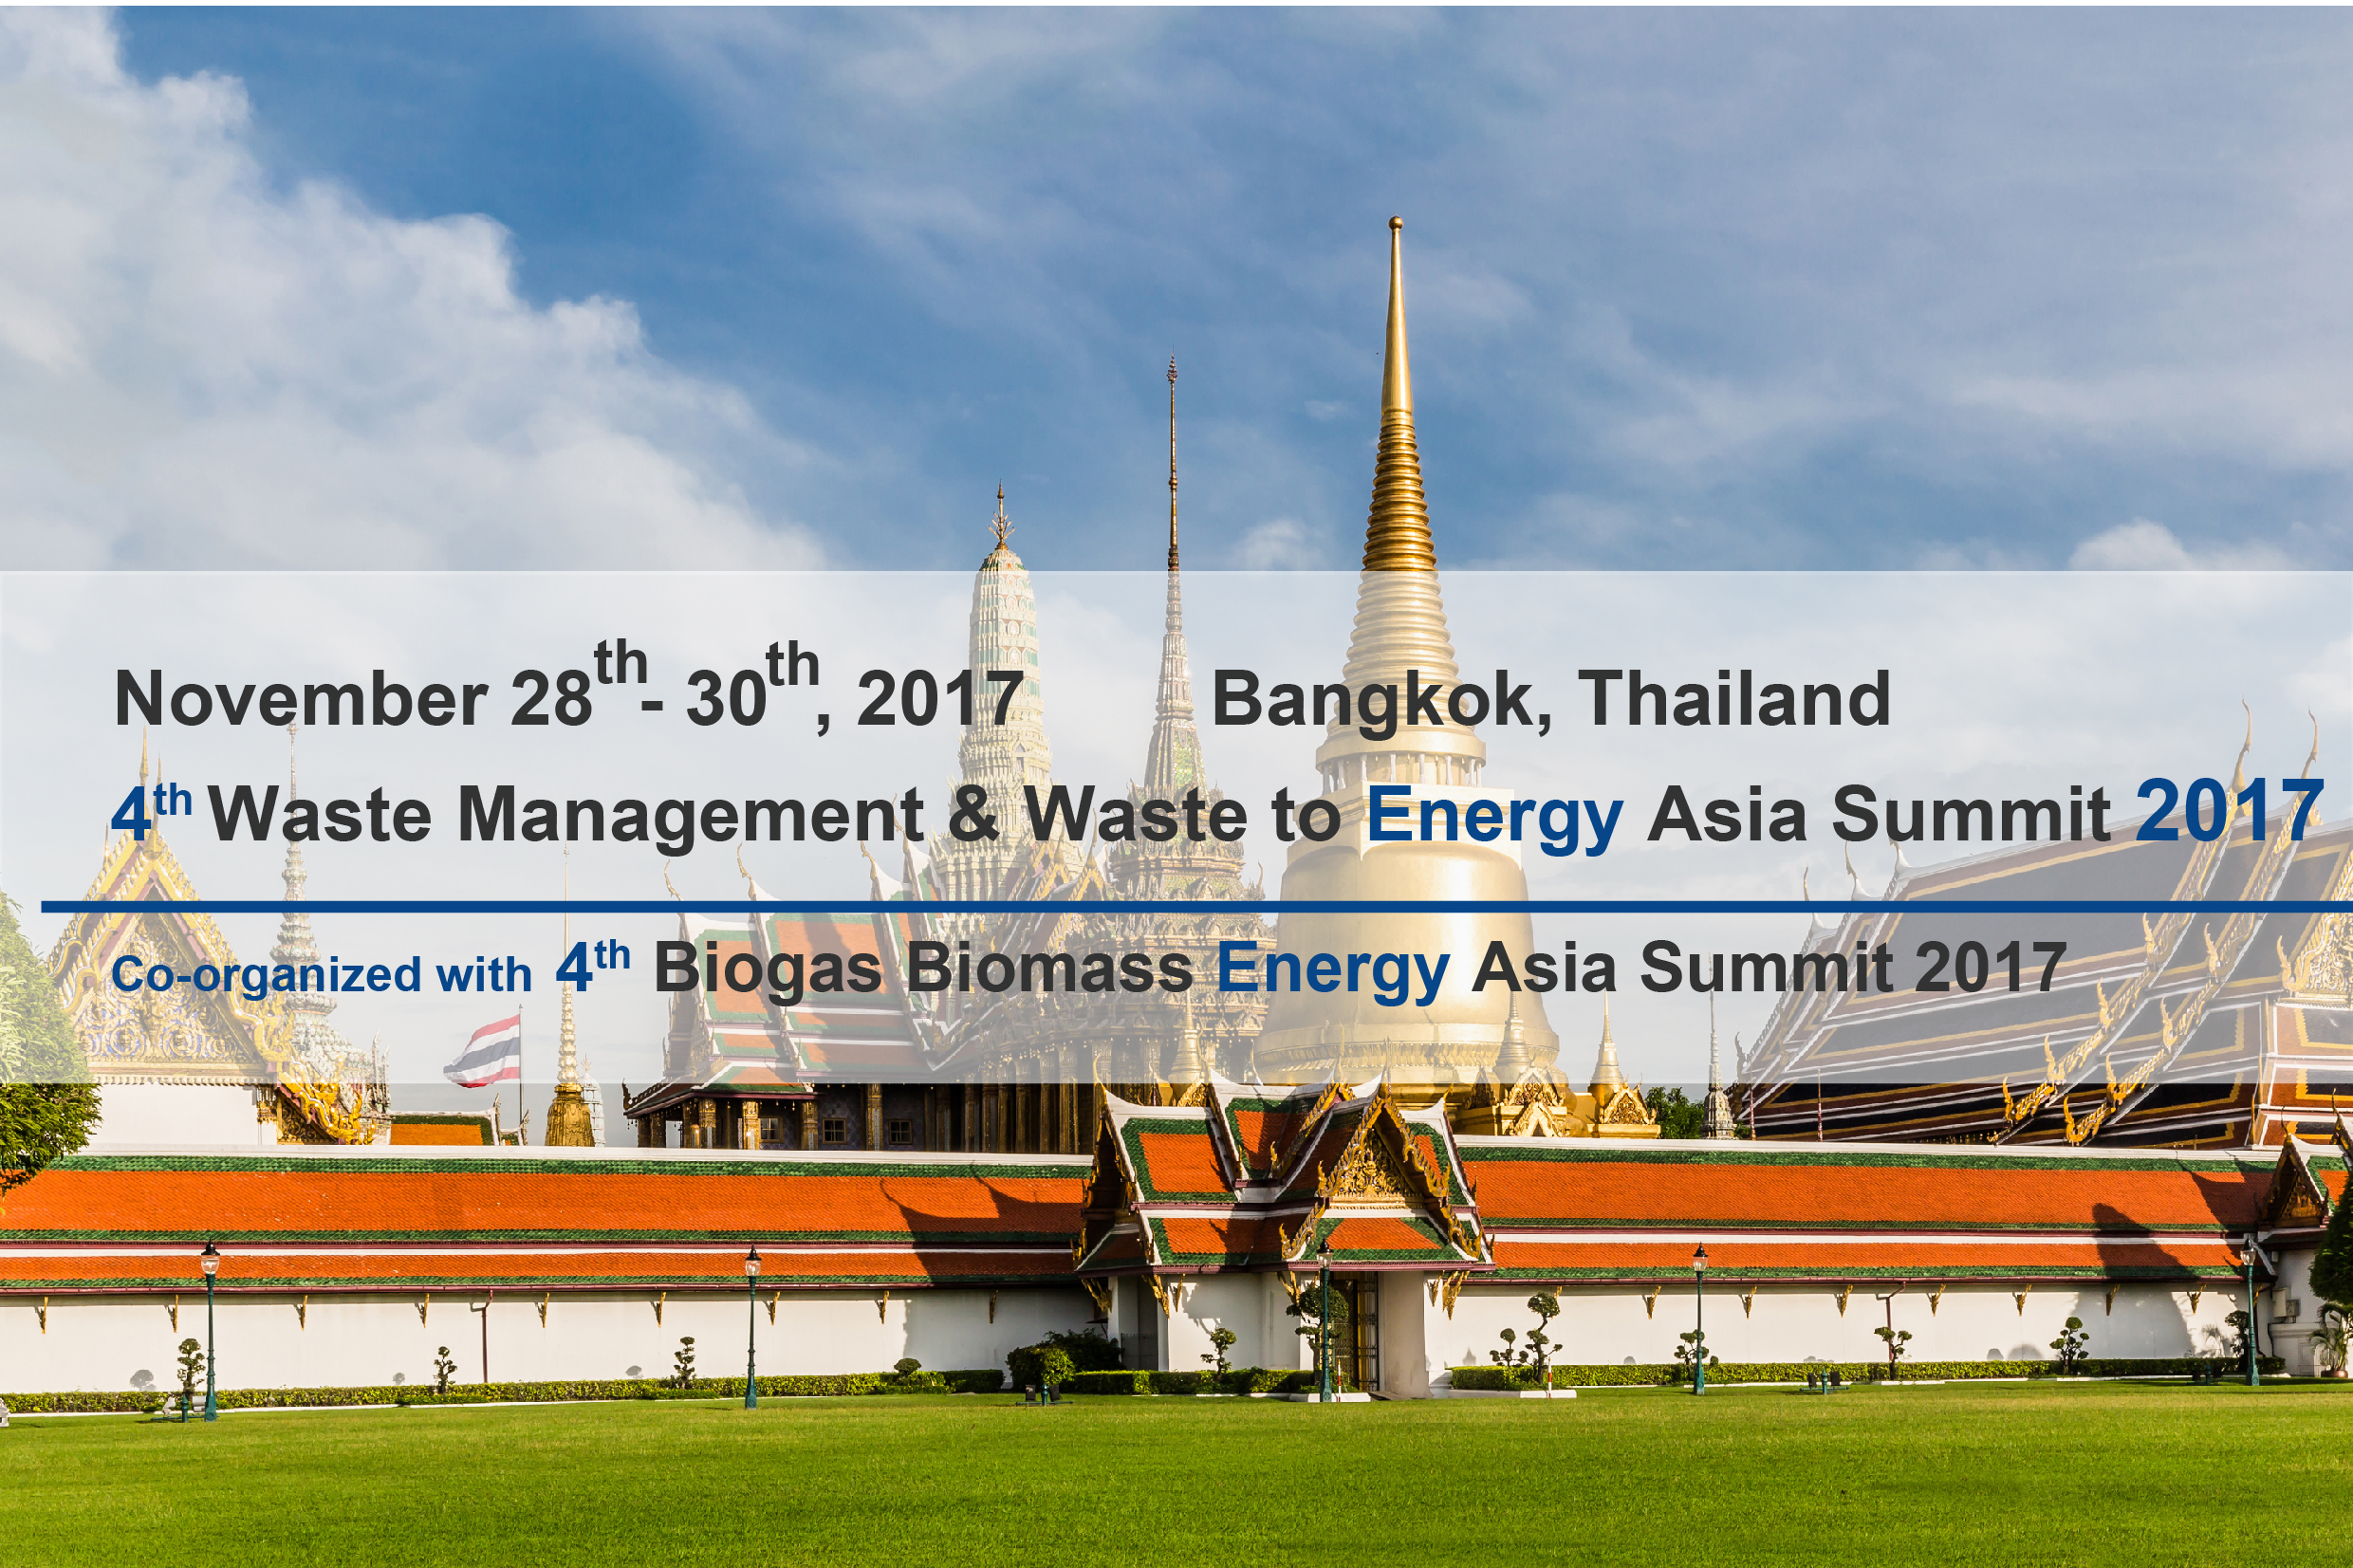 Waste to Energy Asia Summit 2017 Thailand Focus